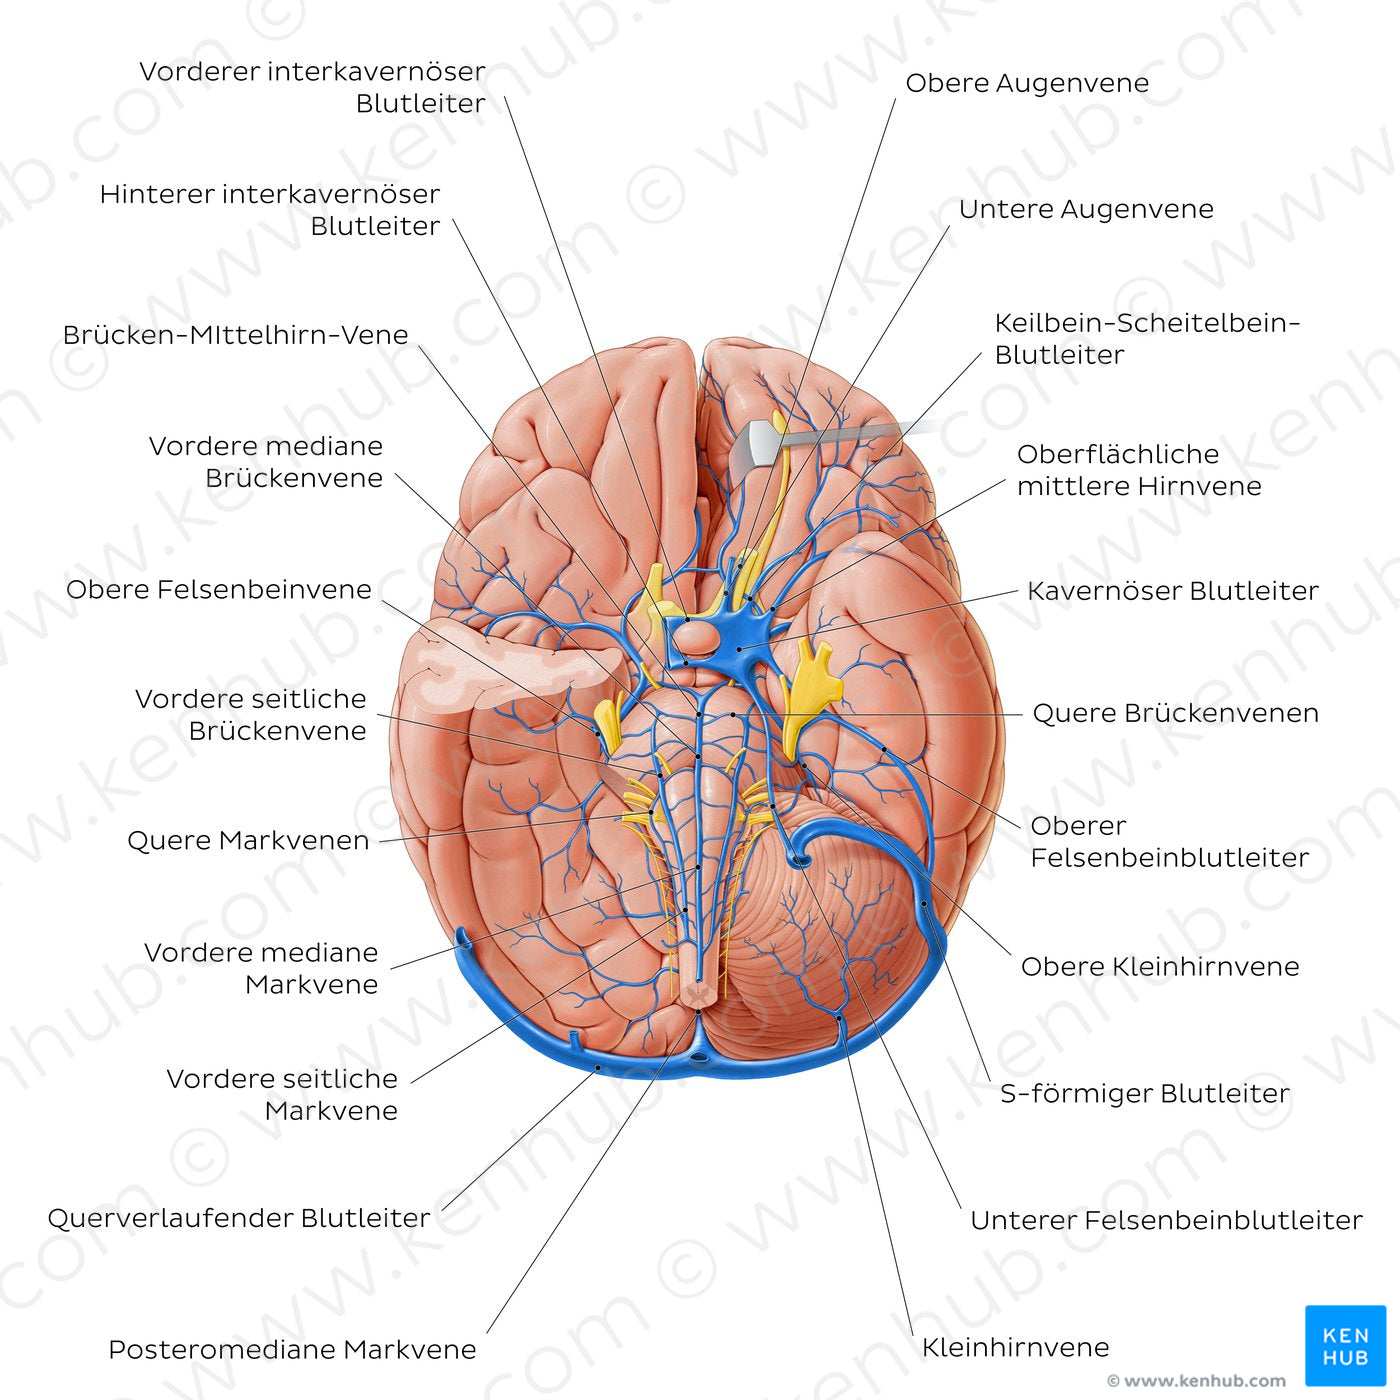 Veins of the brainstem and cerebellum - Basal view (German)